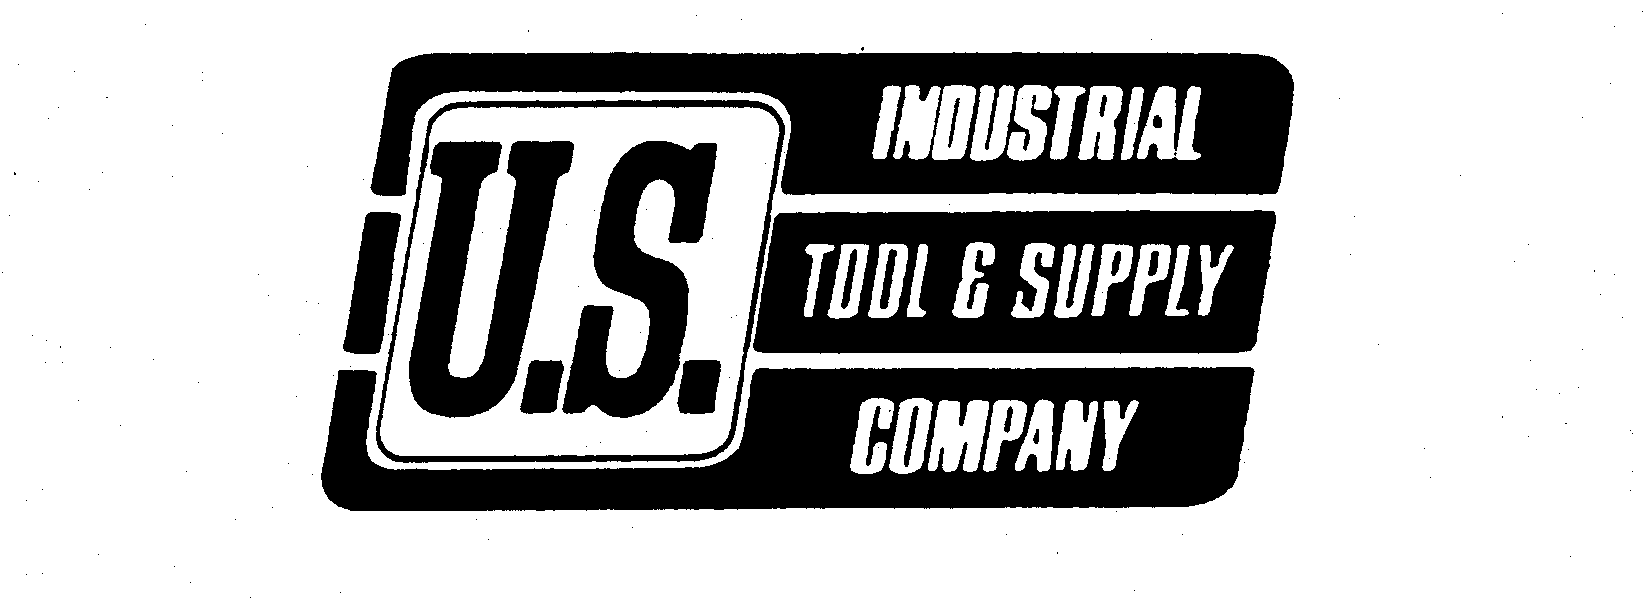 Trademark Logo U.S. INDUSTRIAL TOOL & SUPPLY COMPANY